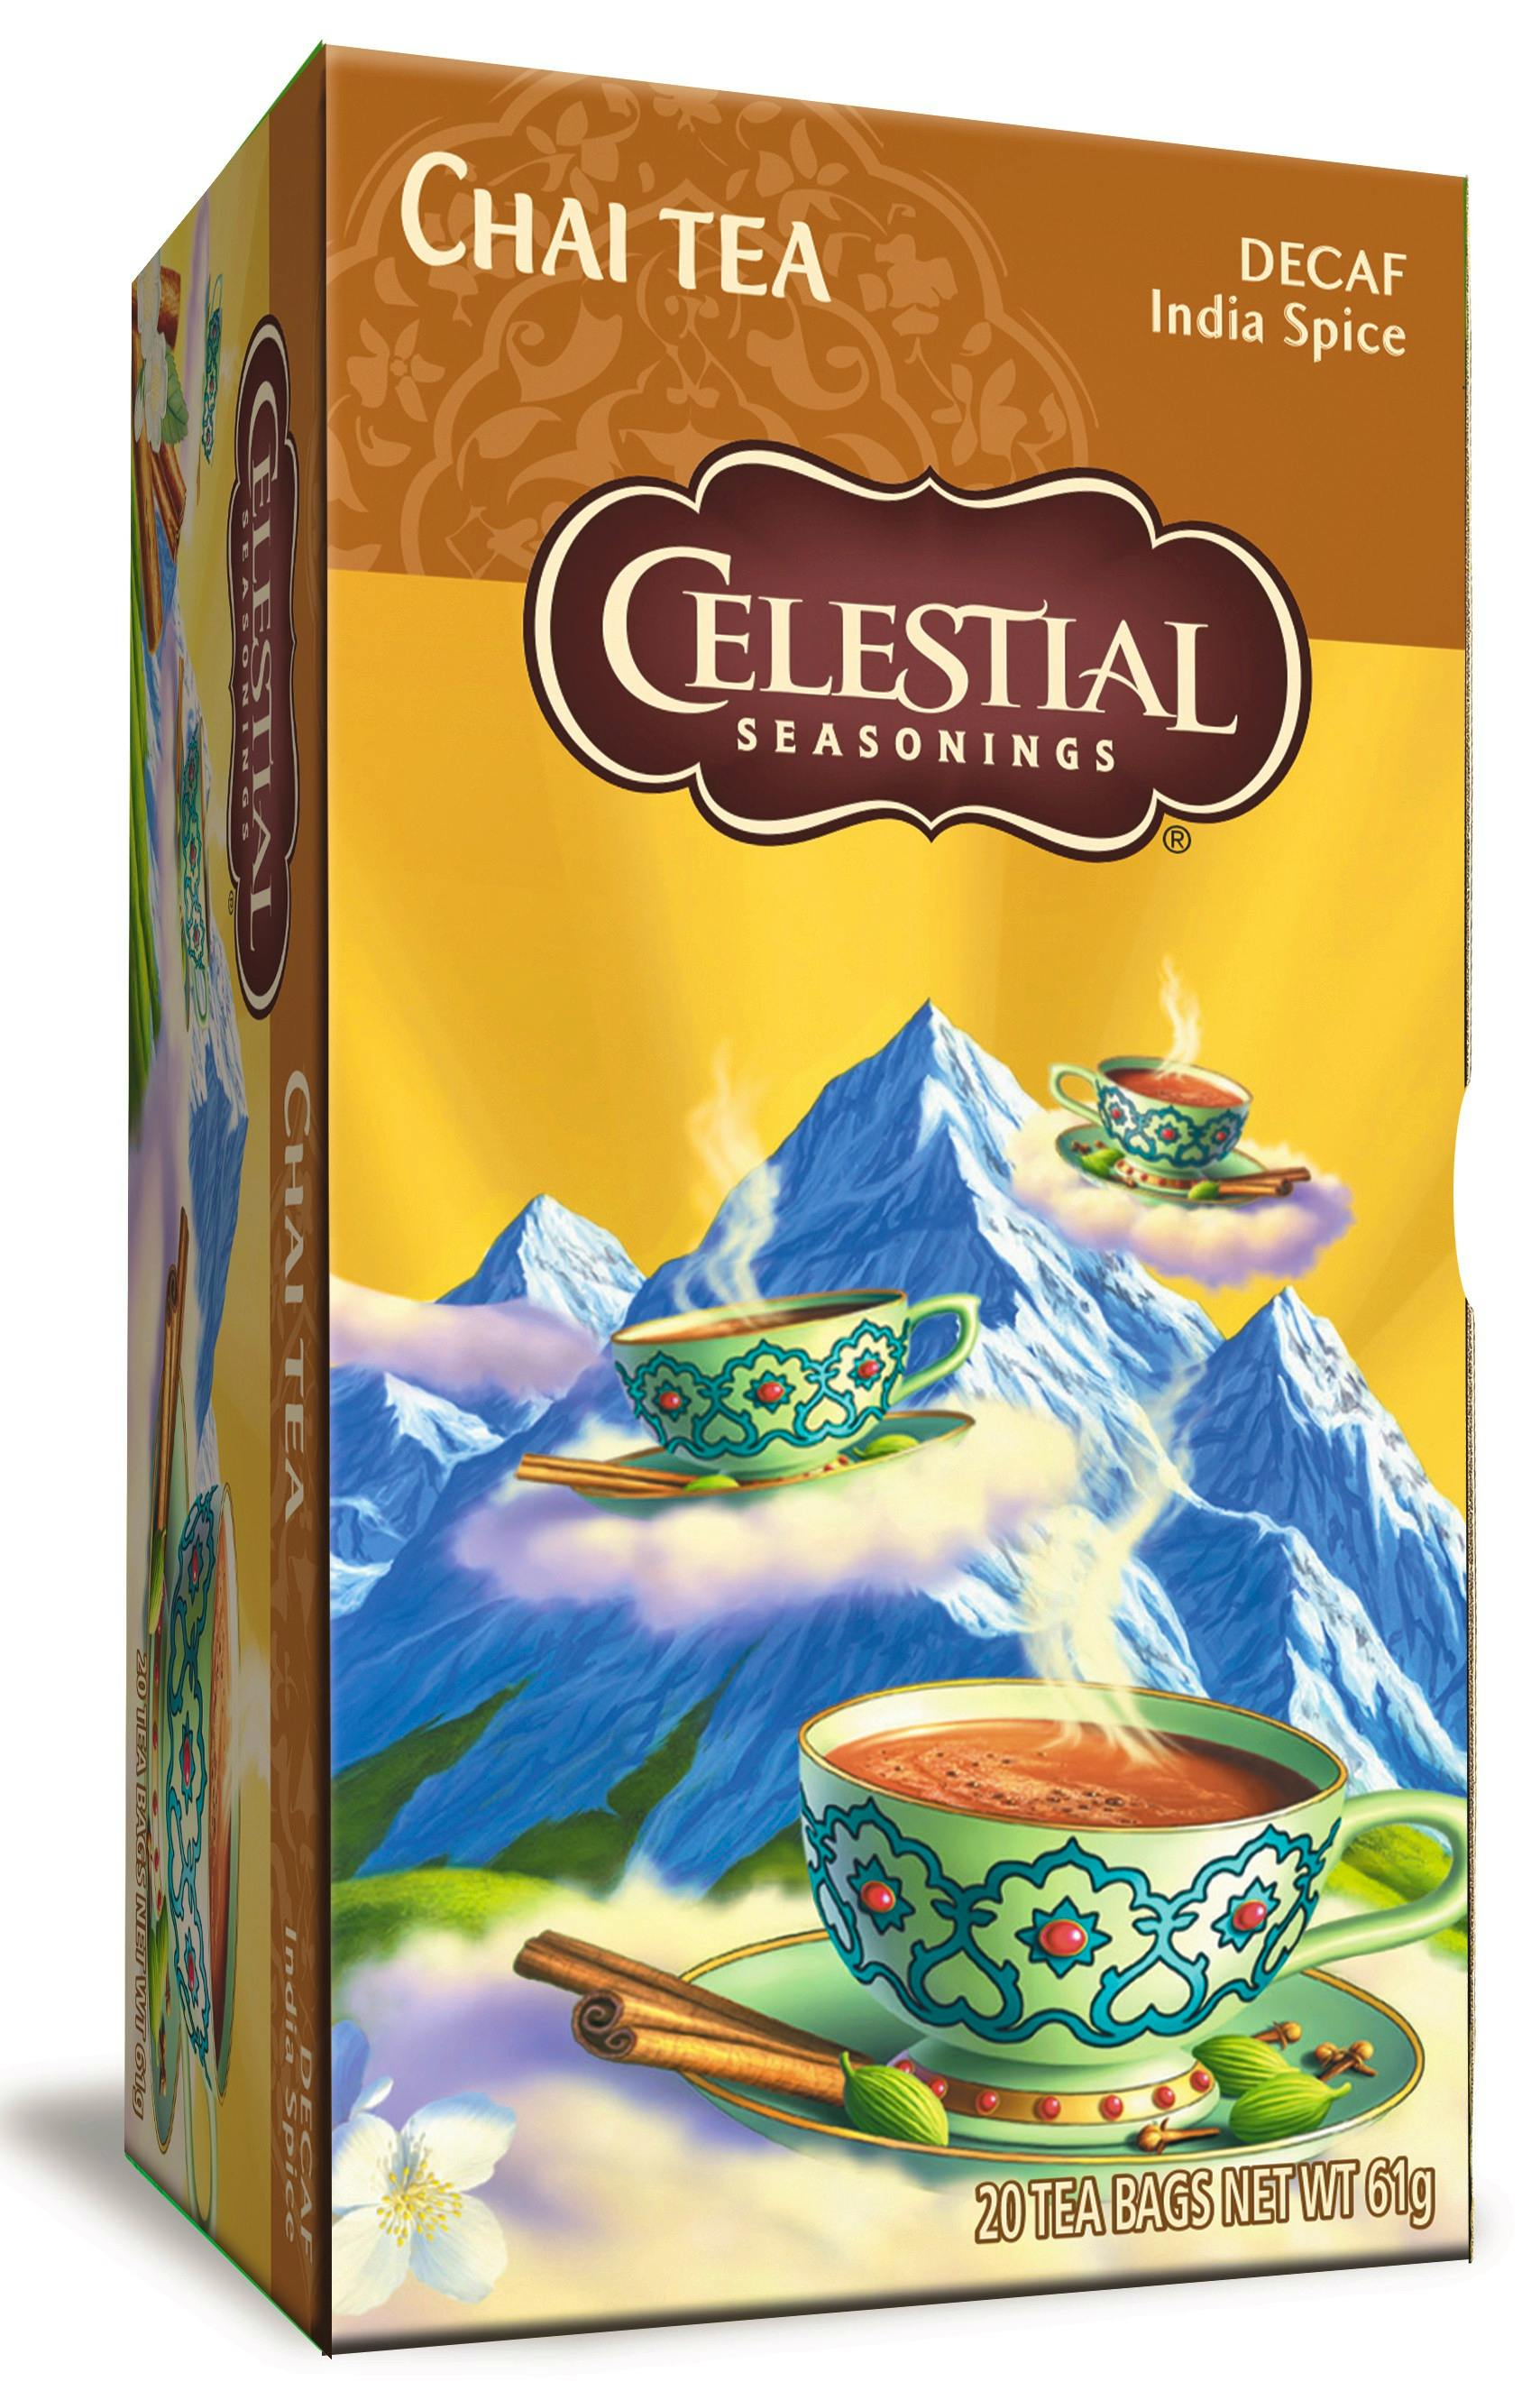 Decaf India Spice Chai – Celestial Seasonings - Hain